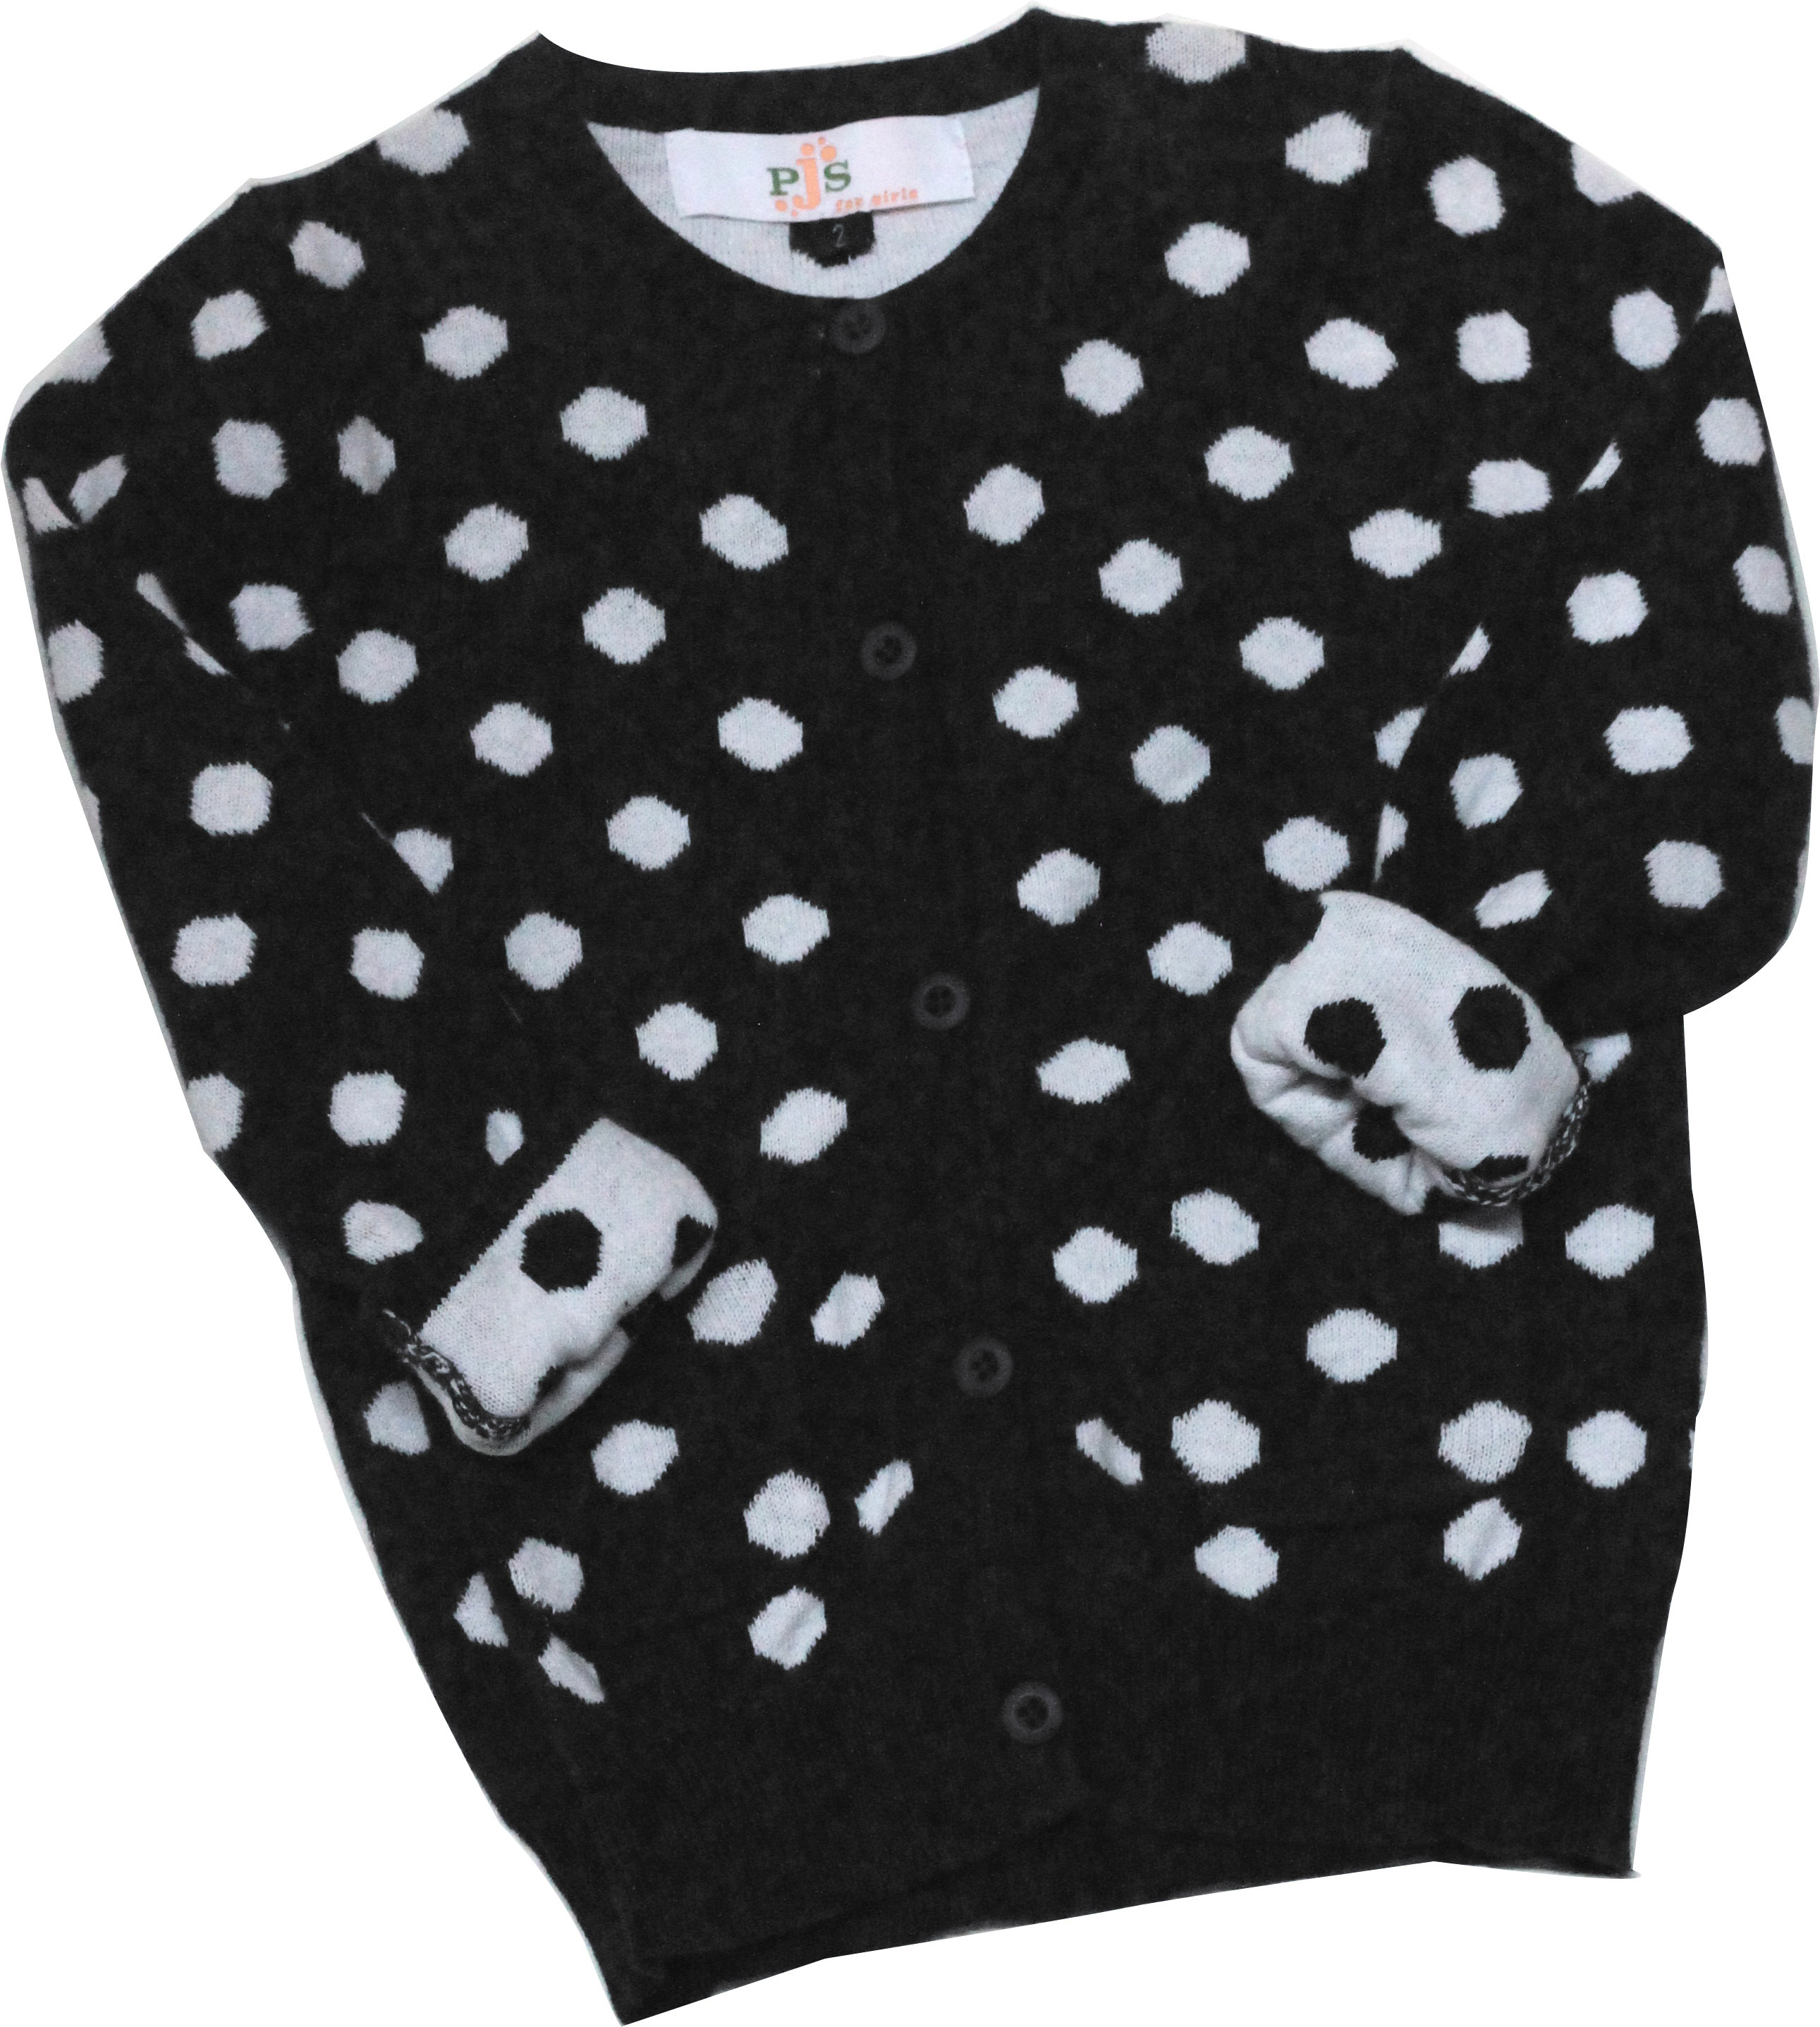 Black Polka Dot Sweater